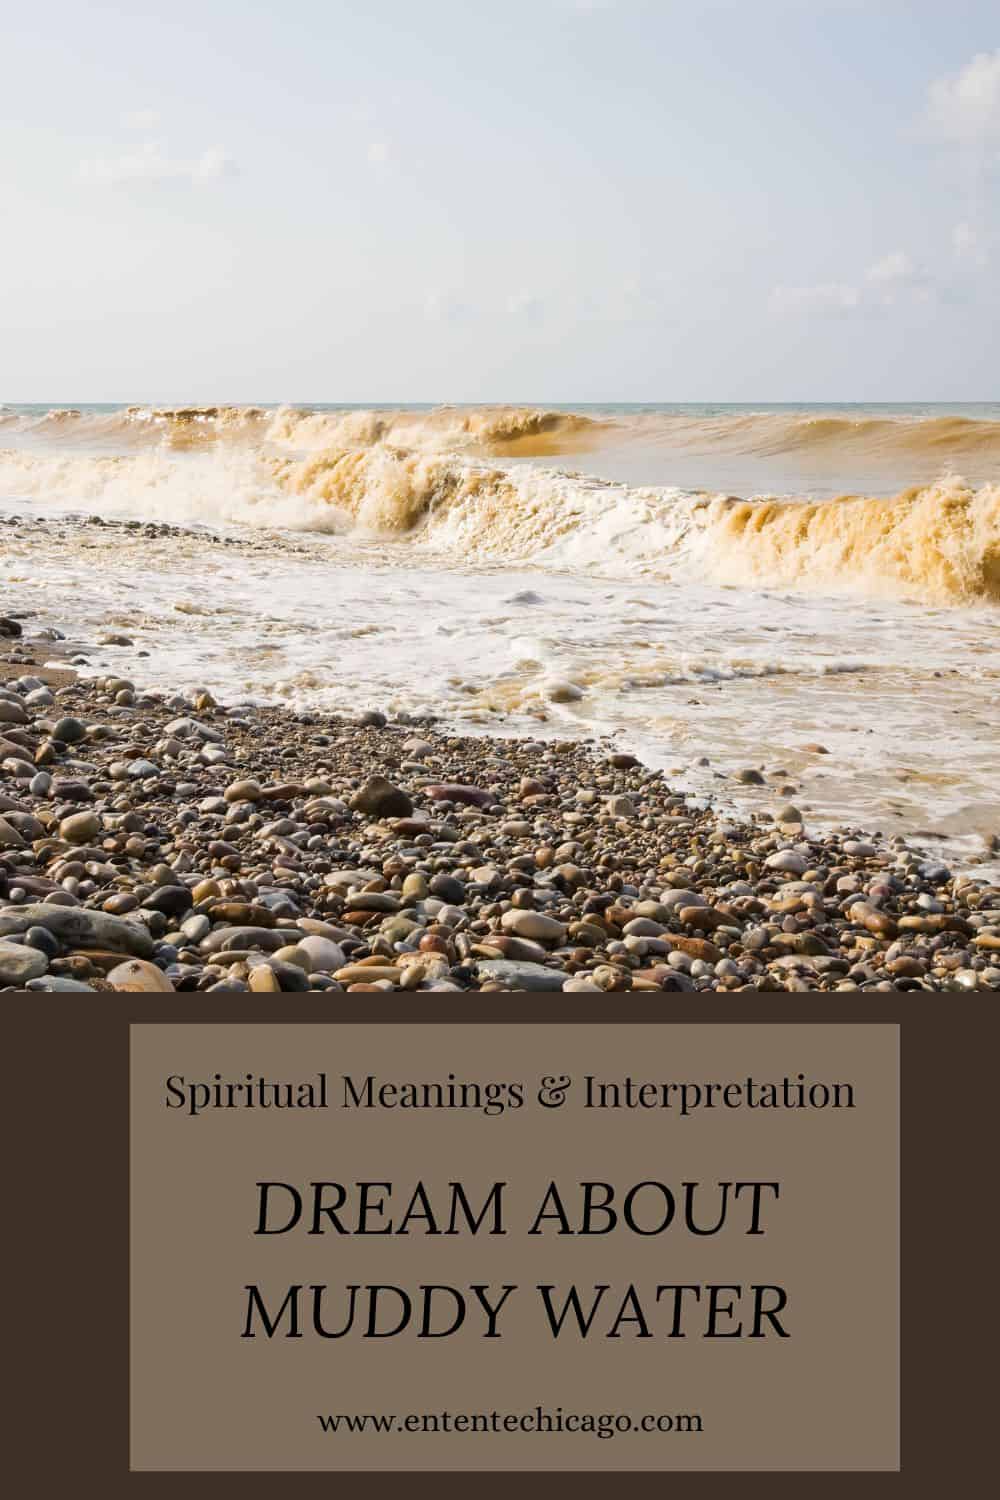 Dream About Muddy Water (Spiritual Meanings & Interpretation)